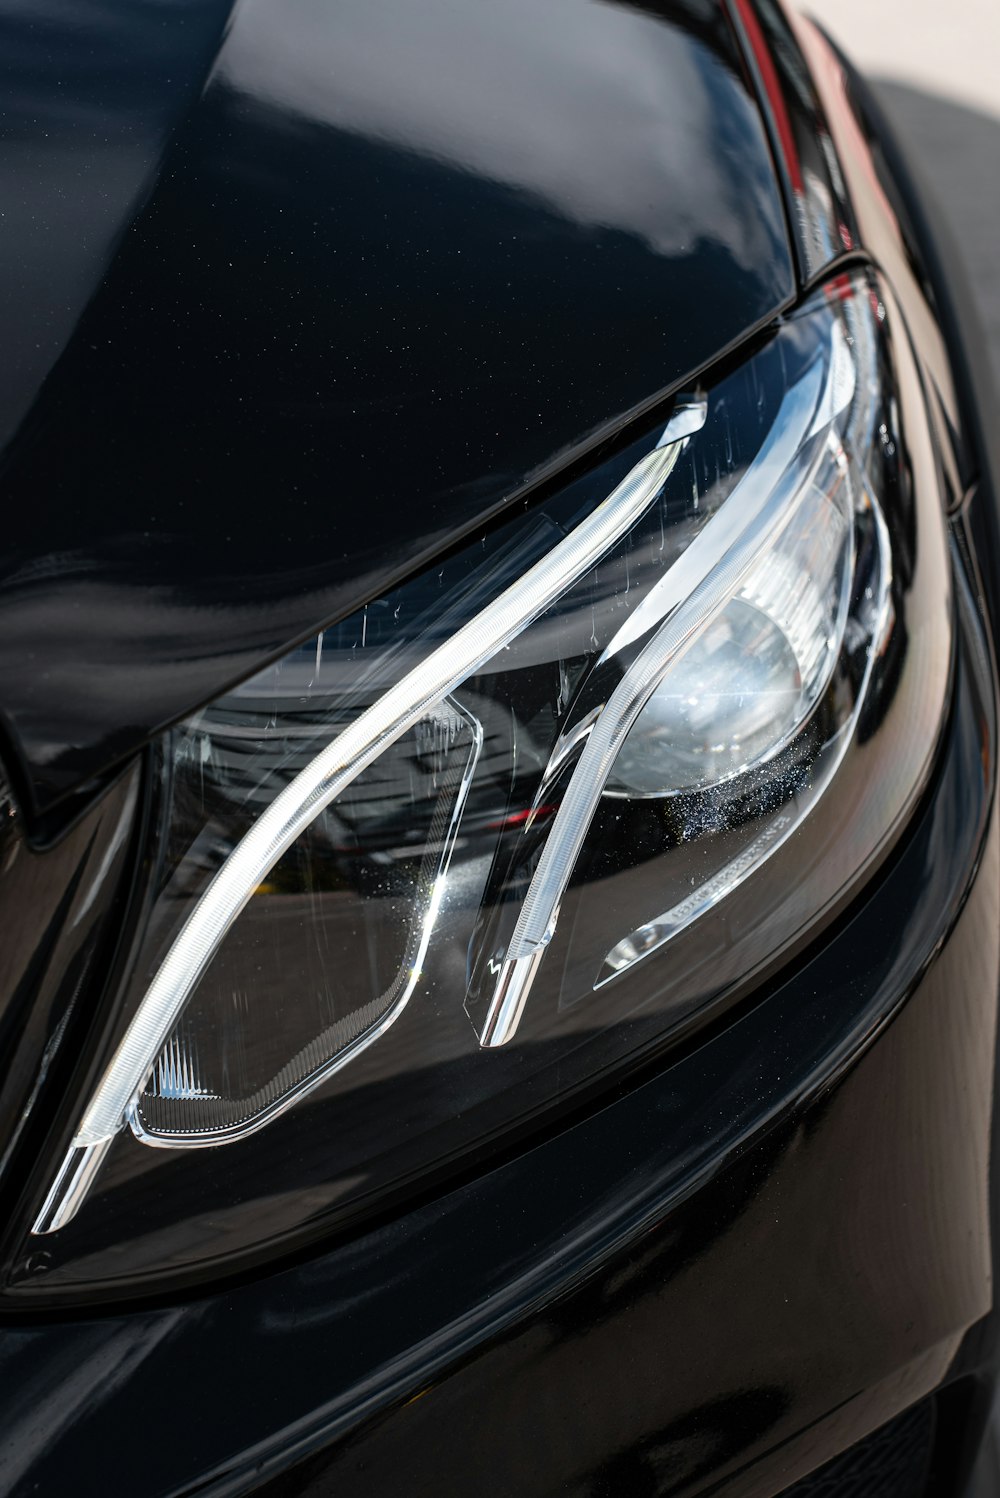 a close up of a car's headlight